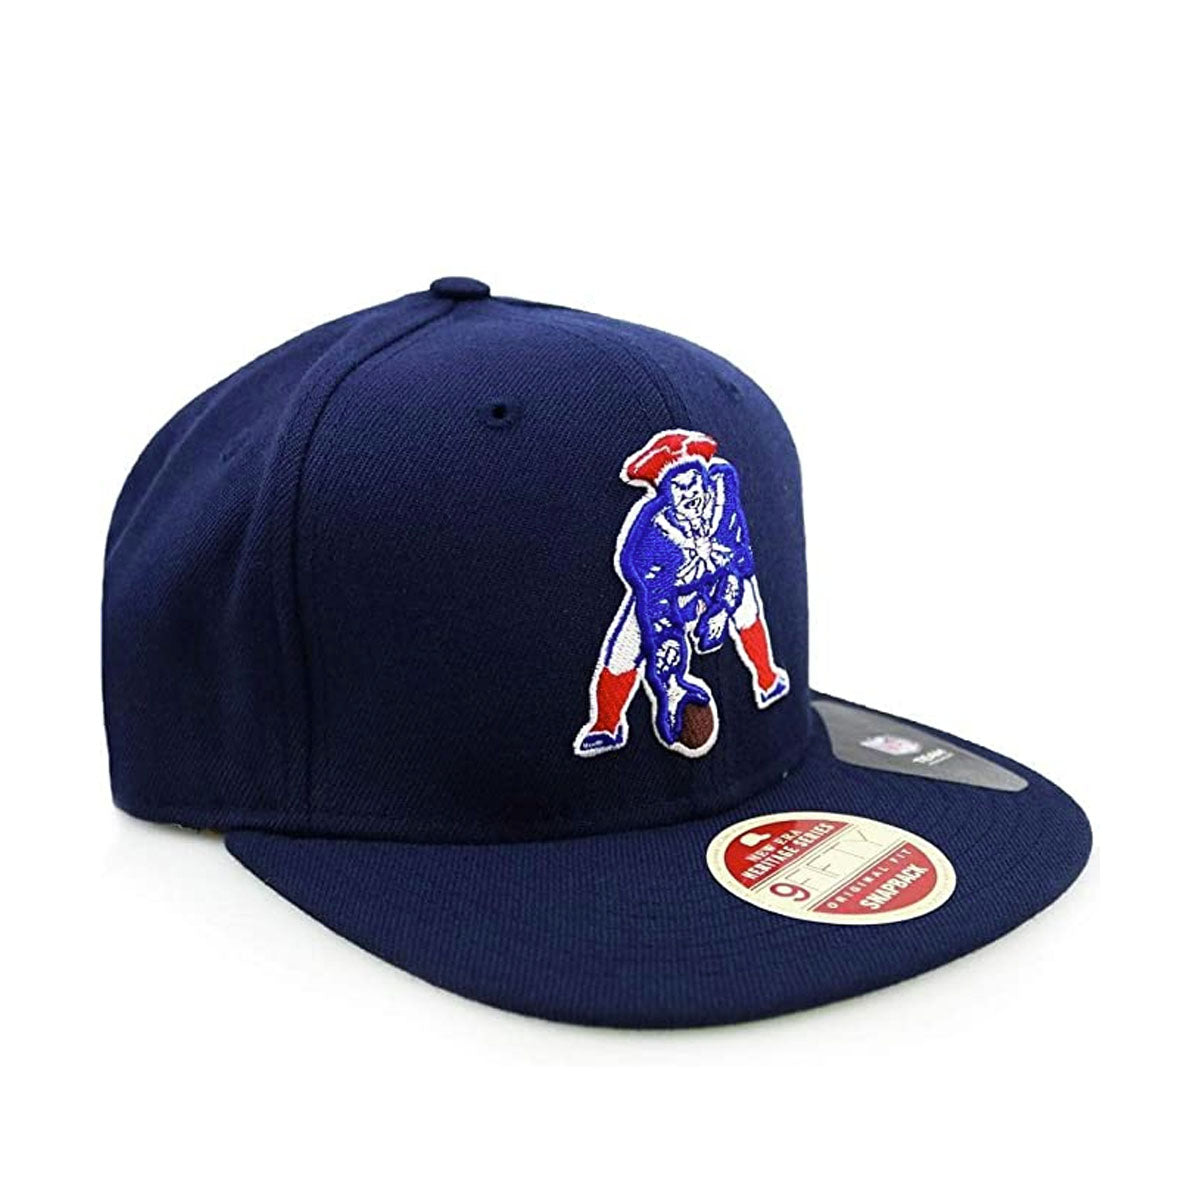 Toronto Blue Jays New Era Vintage 9FIFTY Snapback Hat - White